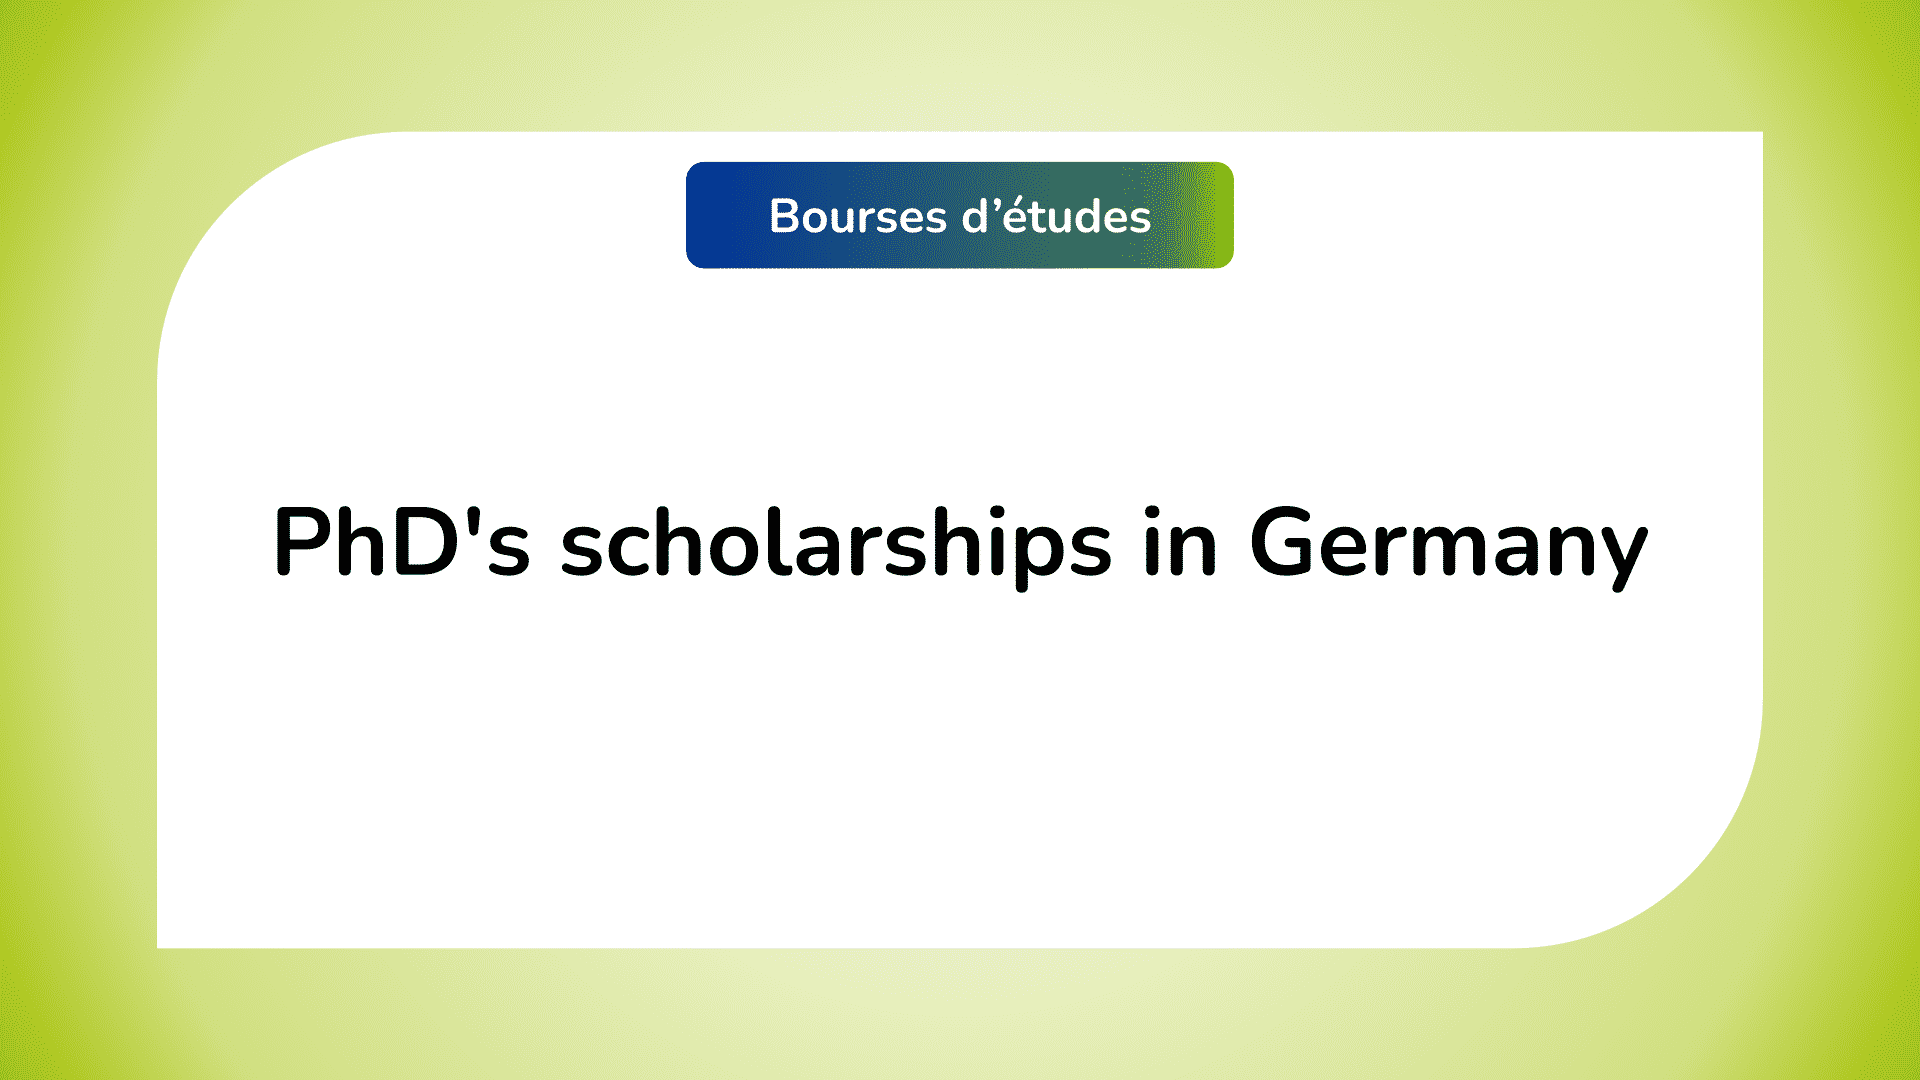 german universities phd scholarships for international students